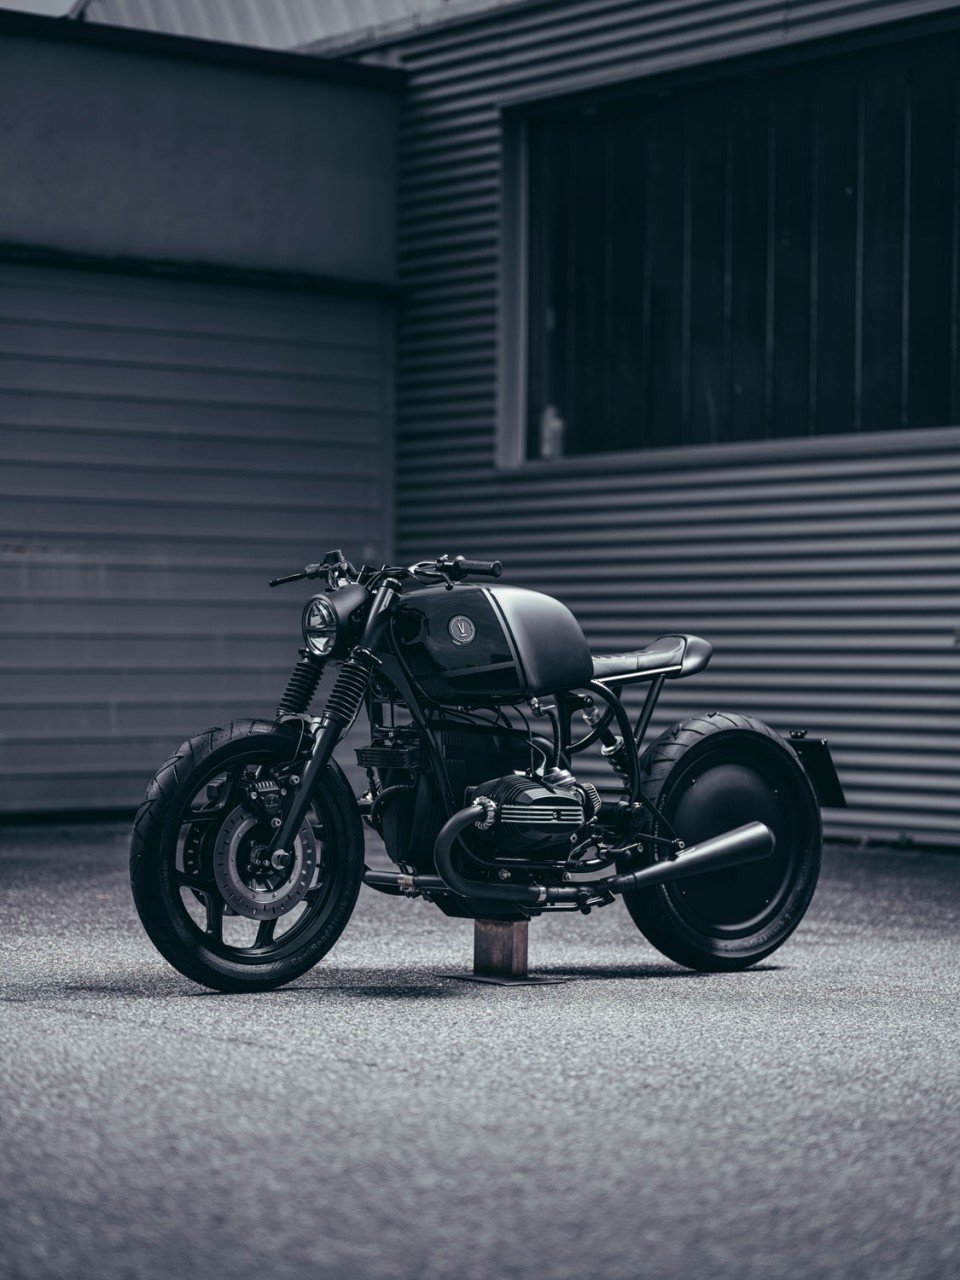 20+ Stunning Black bmw motorcycle image ideas